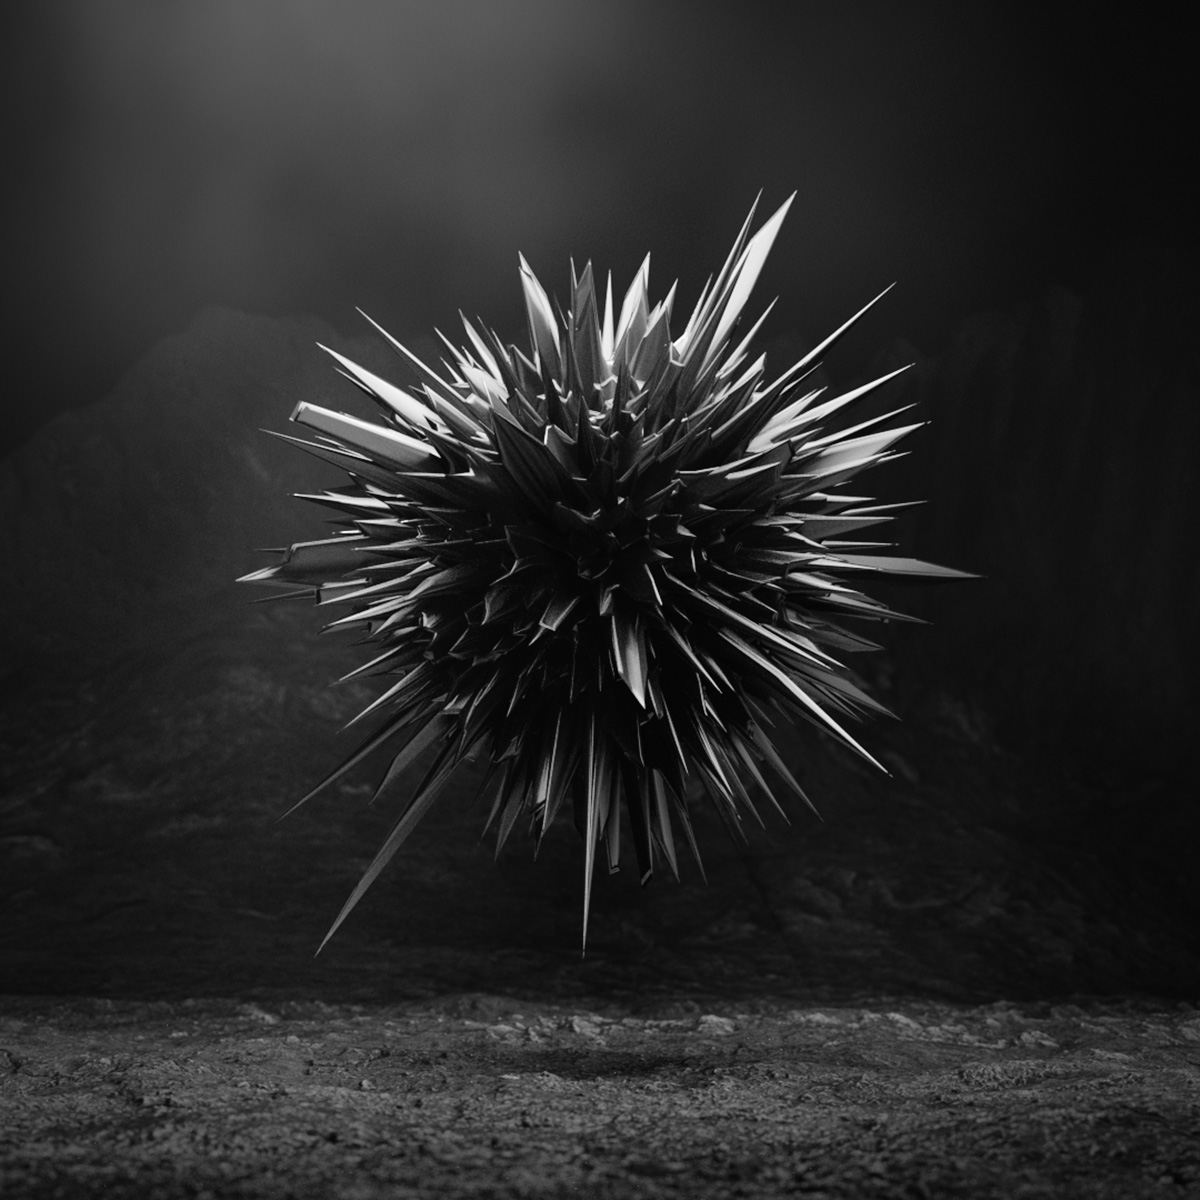 Dark Matter abstract sharp 3d CGI rendering on black background